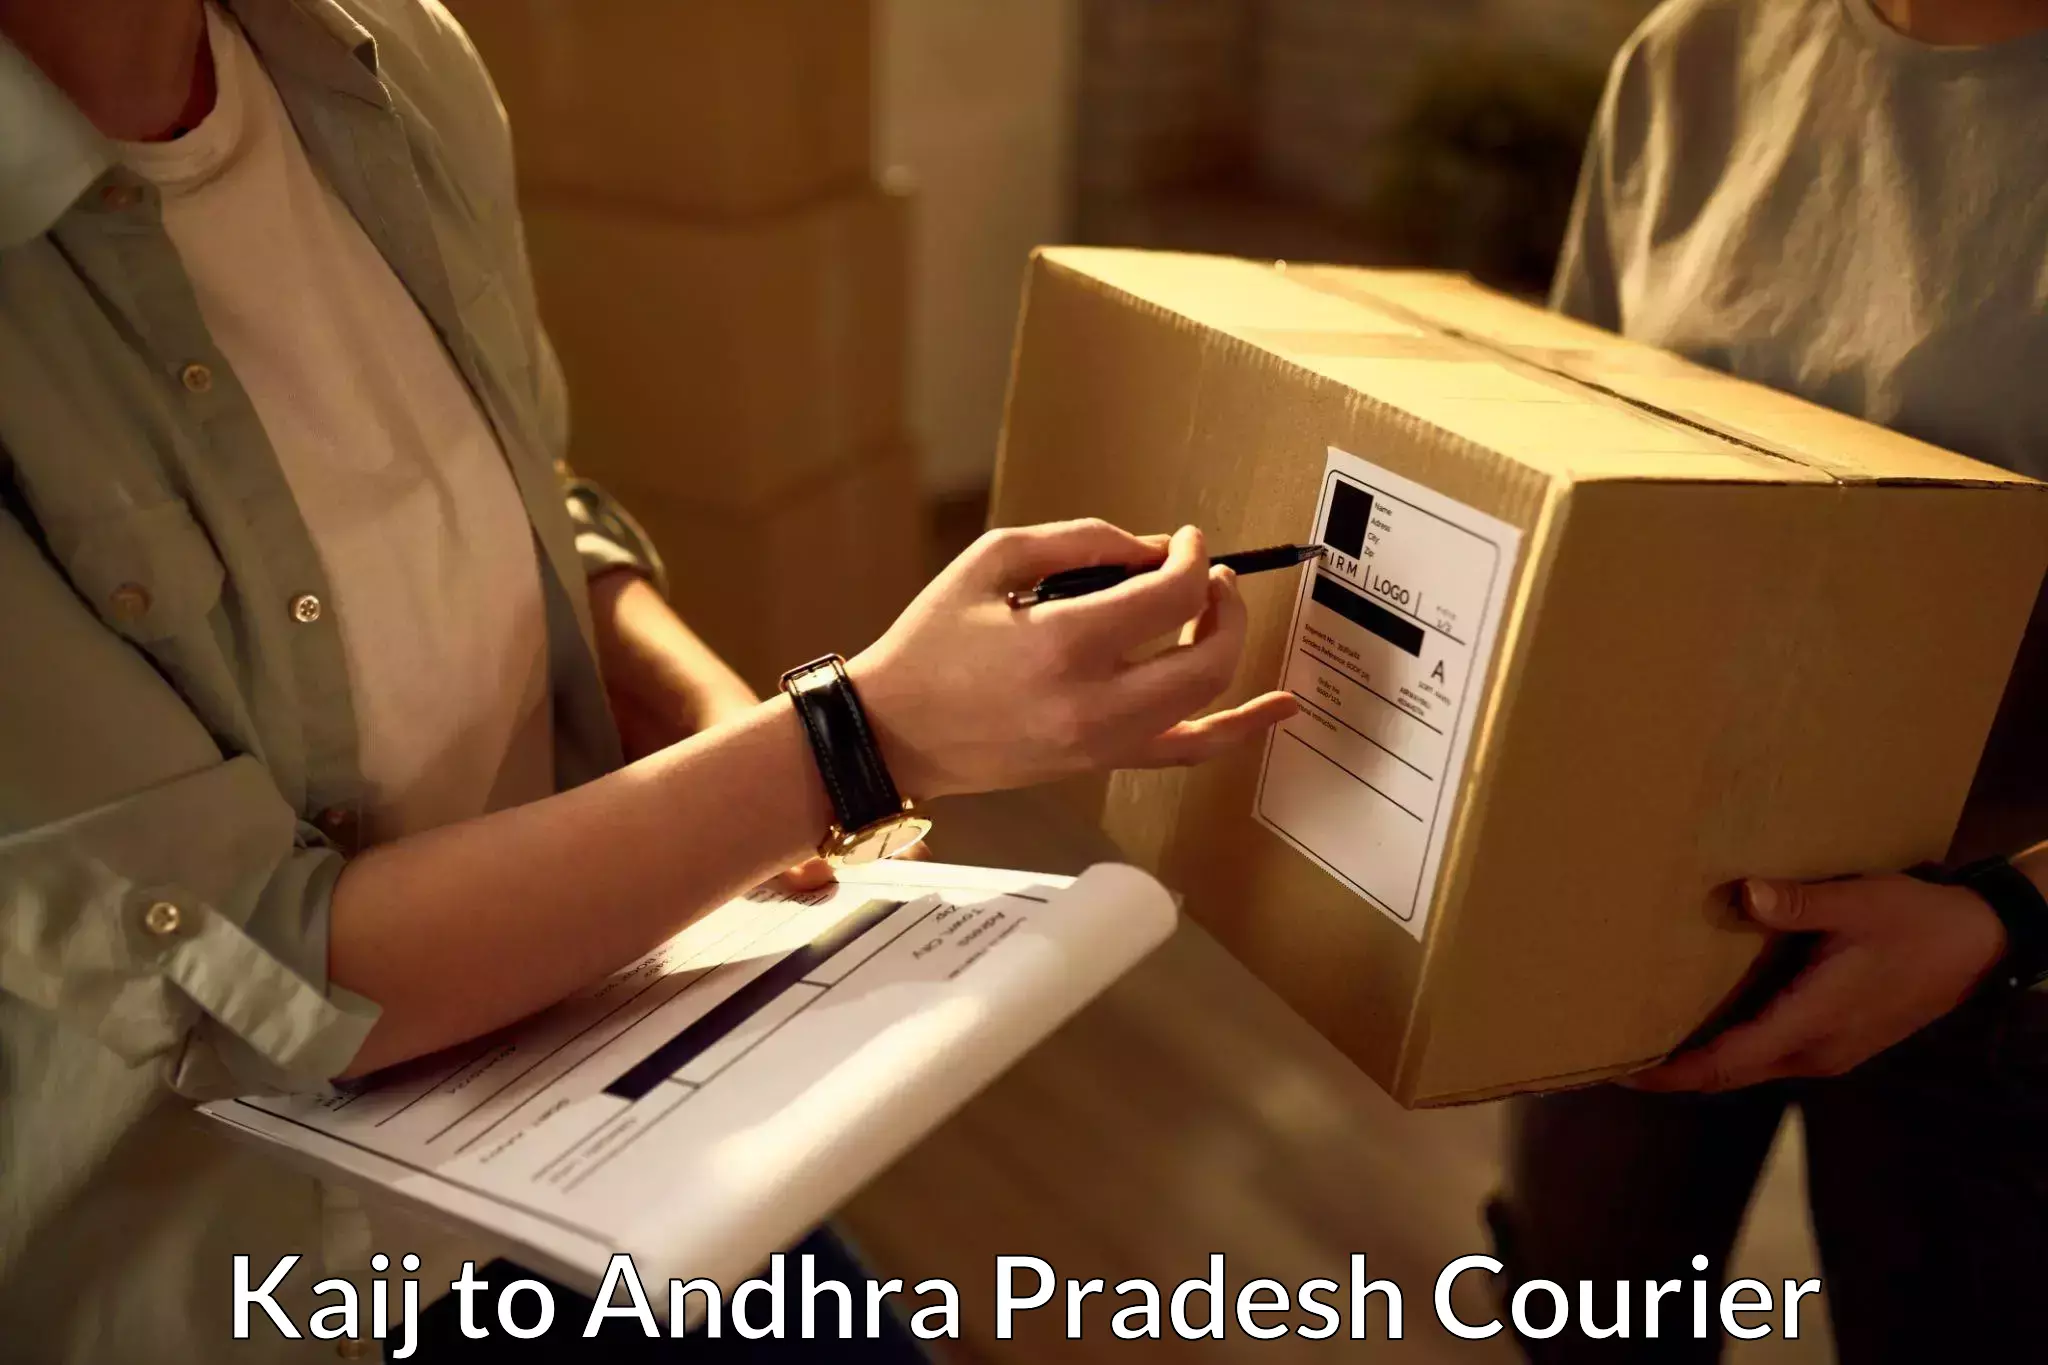 Cash on delivery service Kaij to Andhra Pradesh